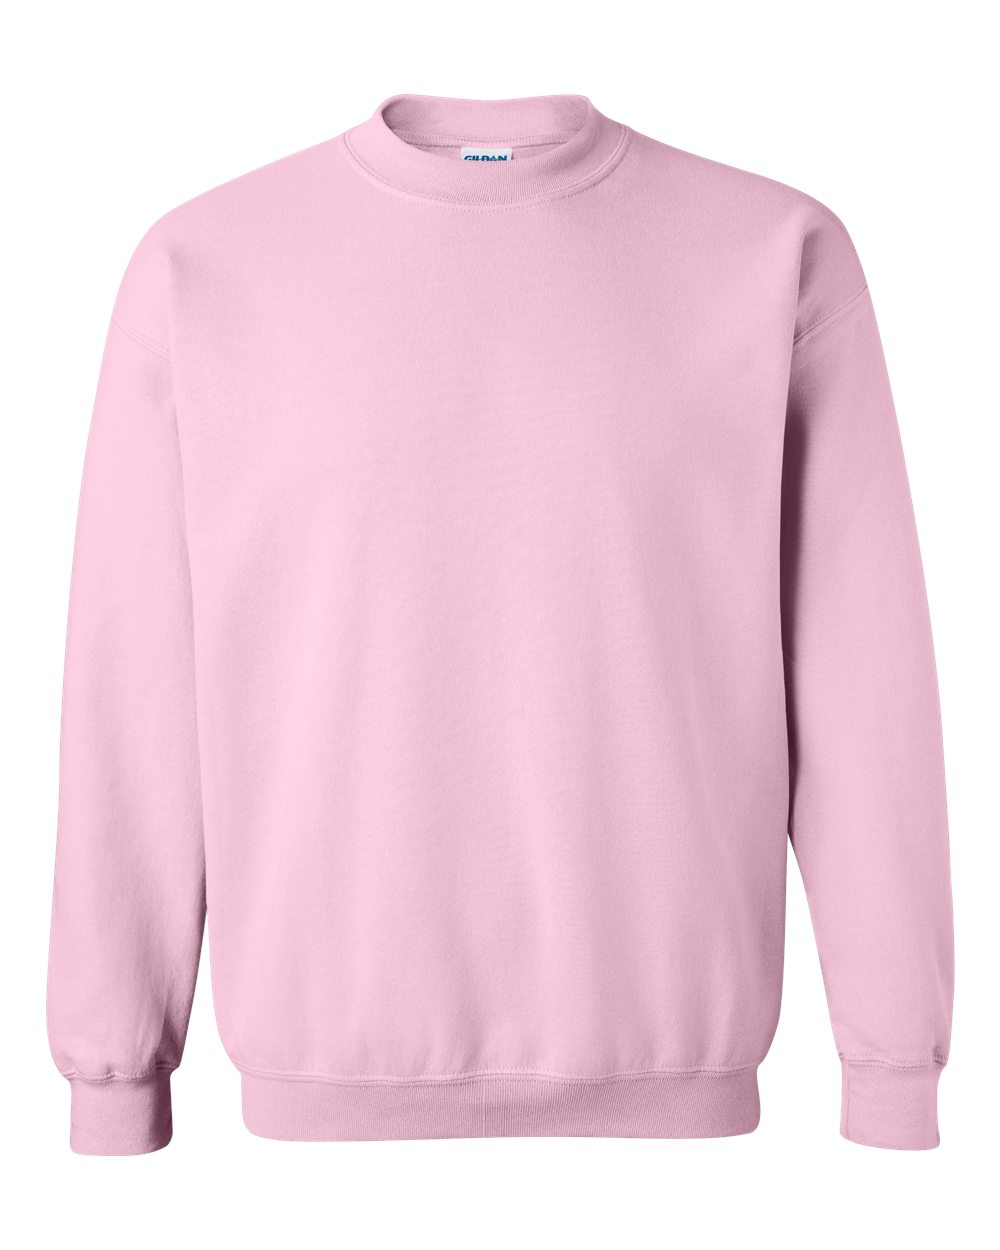 I'm The Problem Sweatshirt- Pink, Blue or Sand